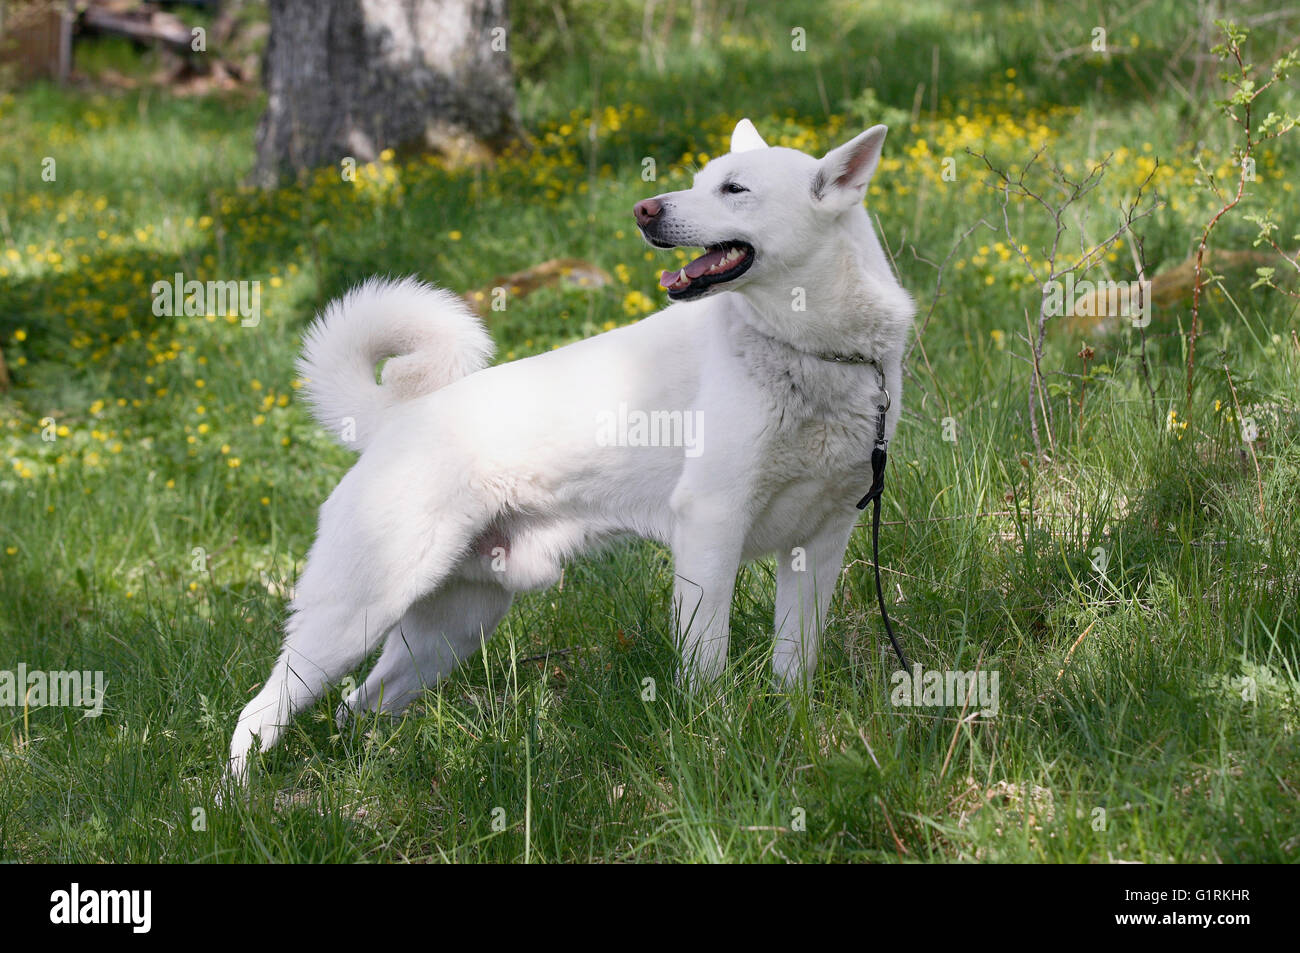 swedish white elkhound